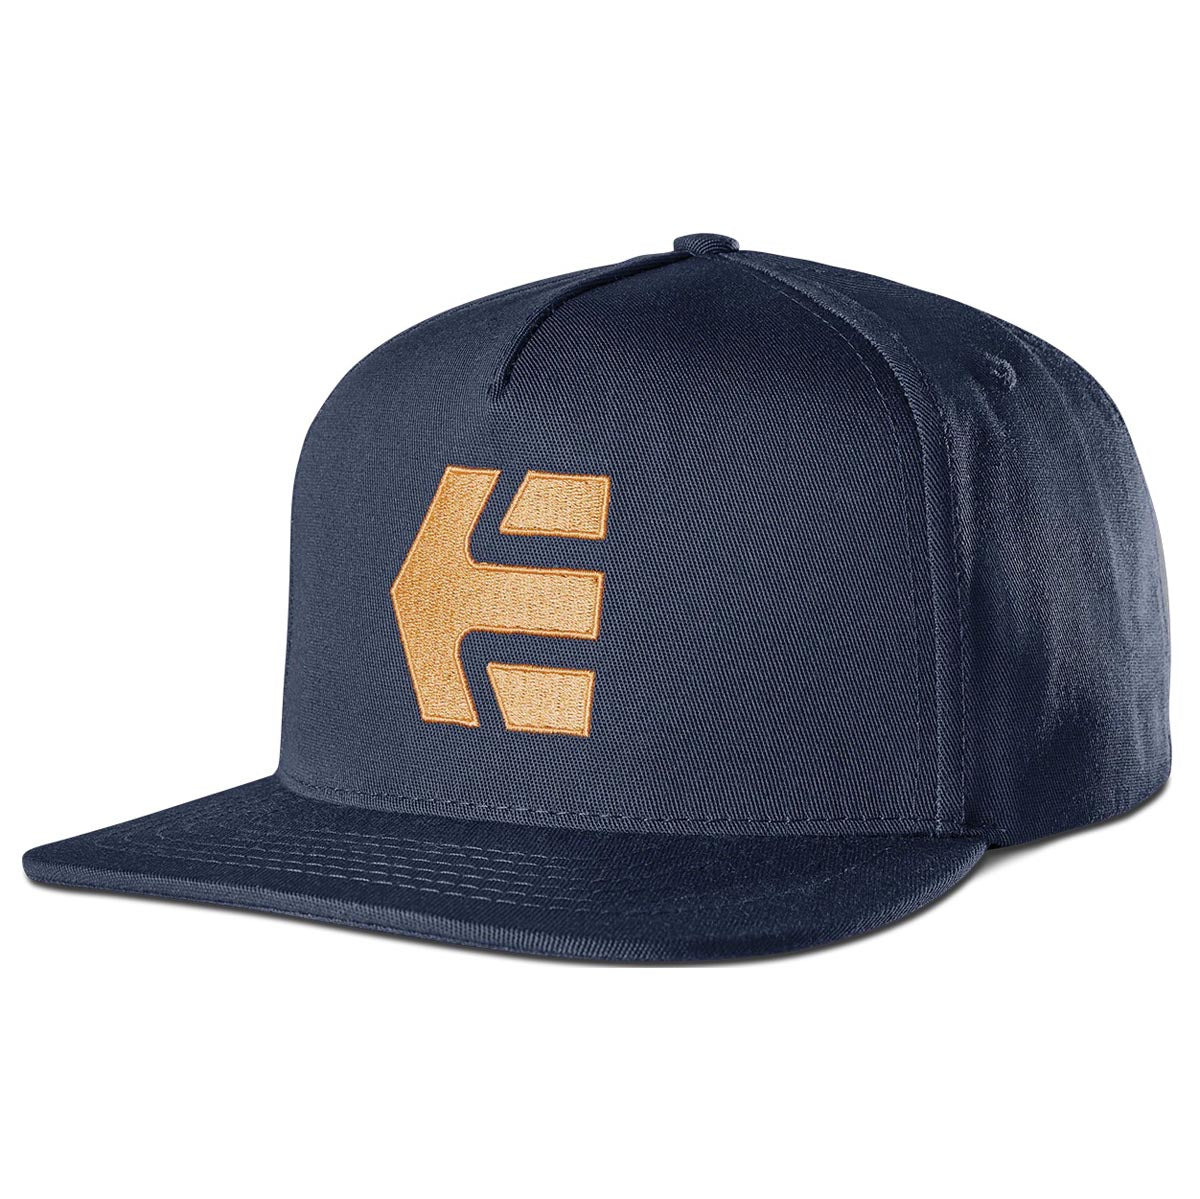 Etnies Icon Snapback Hat - Dark Navy image 1